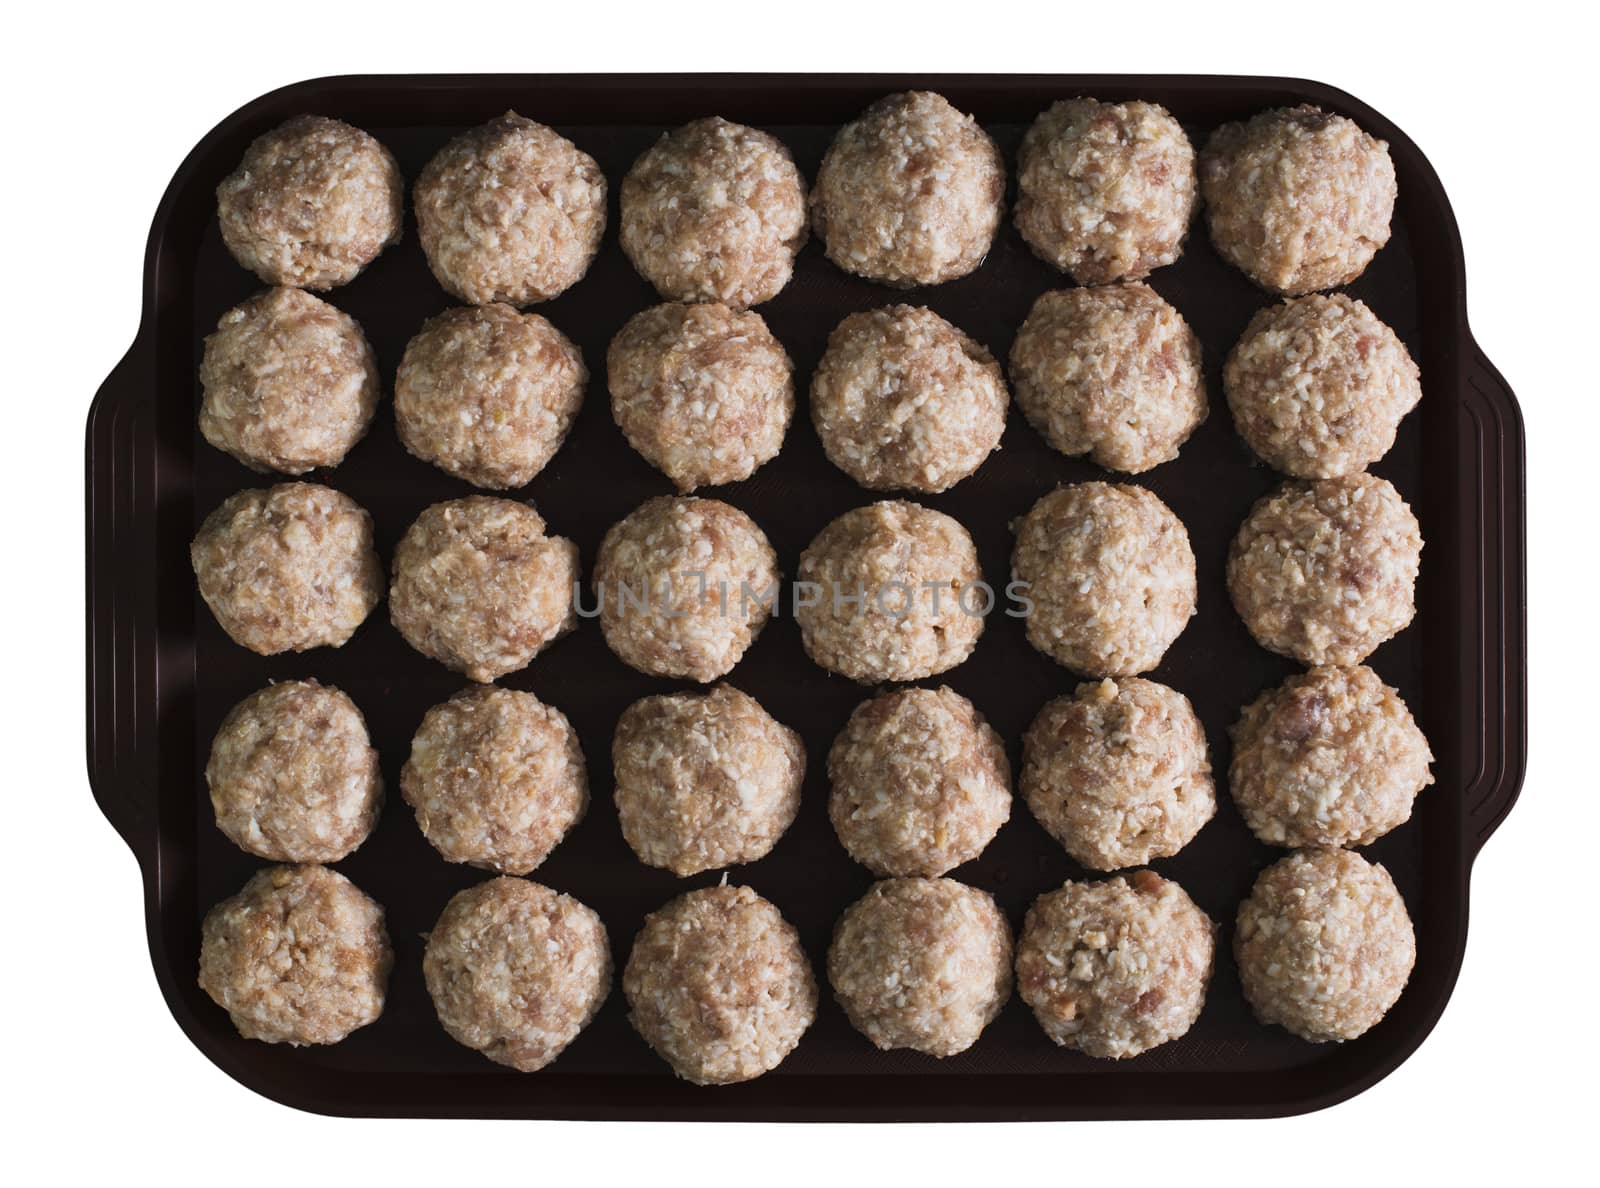 Lots uncooked meatballs on the dark tray by kzen